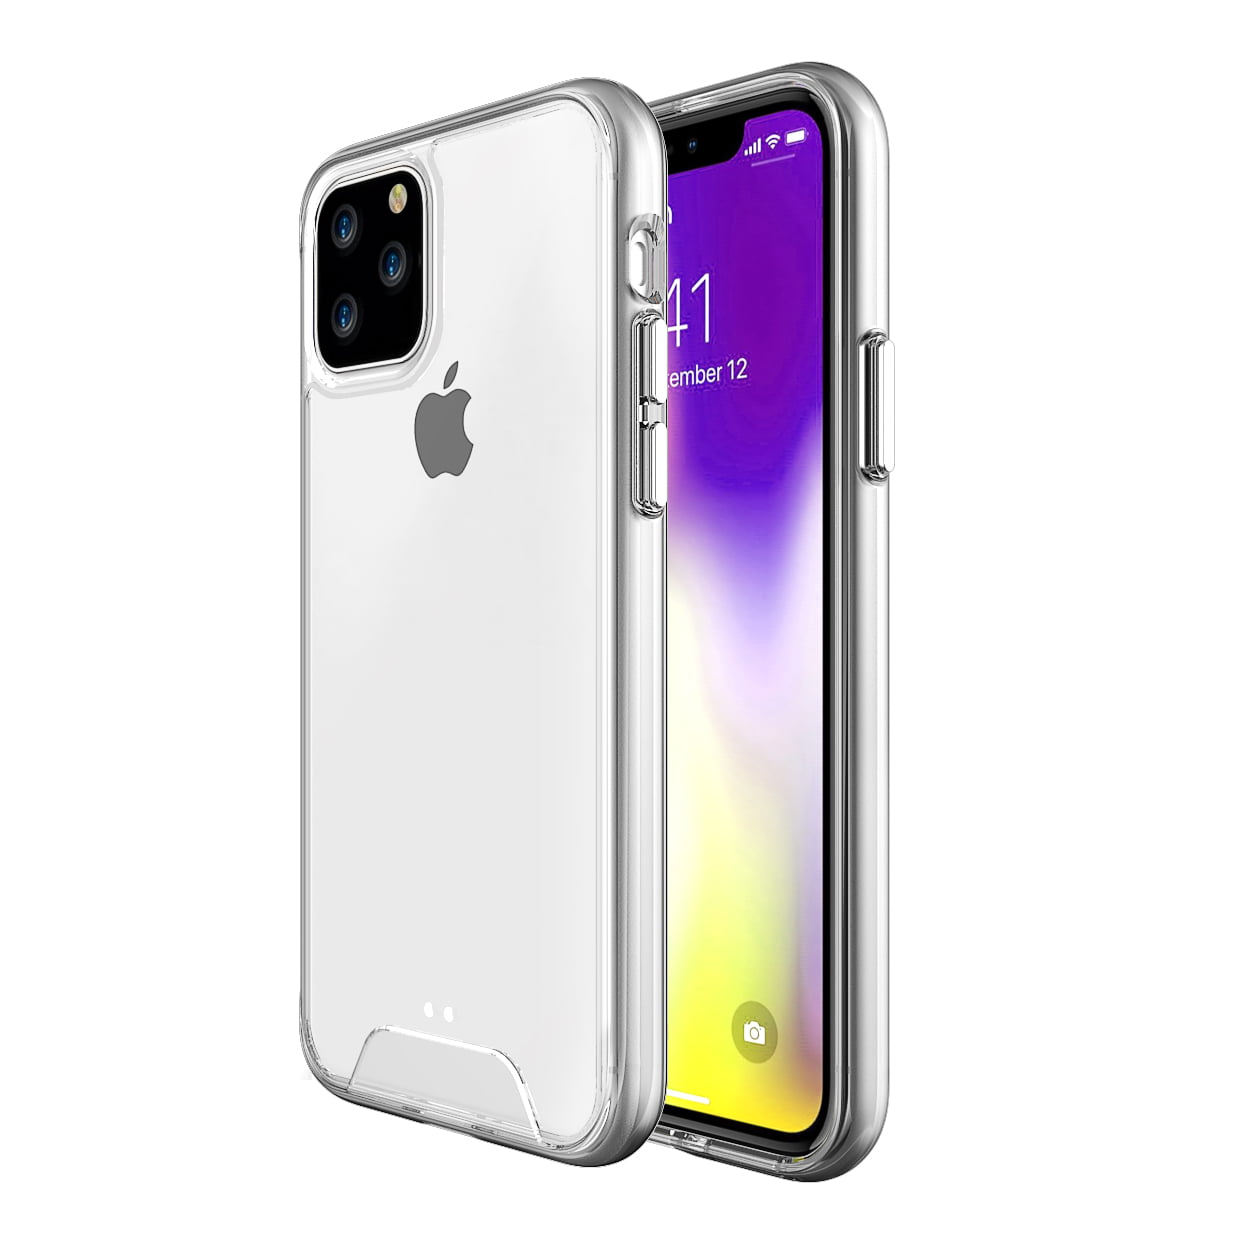 iPhone-2019-58inch-1- Fonez-Keywords : MacBook - Fonez.ie - laptop- Tablet - Sim free - Unlock - Phones - iphone - android - macbook pro - apple macbook- fonez -samsung - samsung book-sale - best price - deal